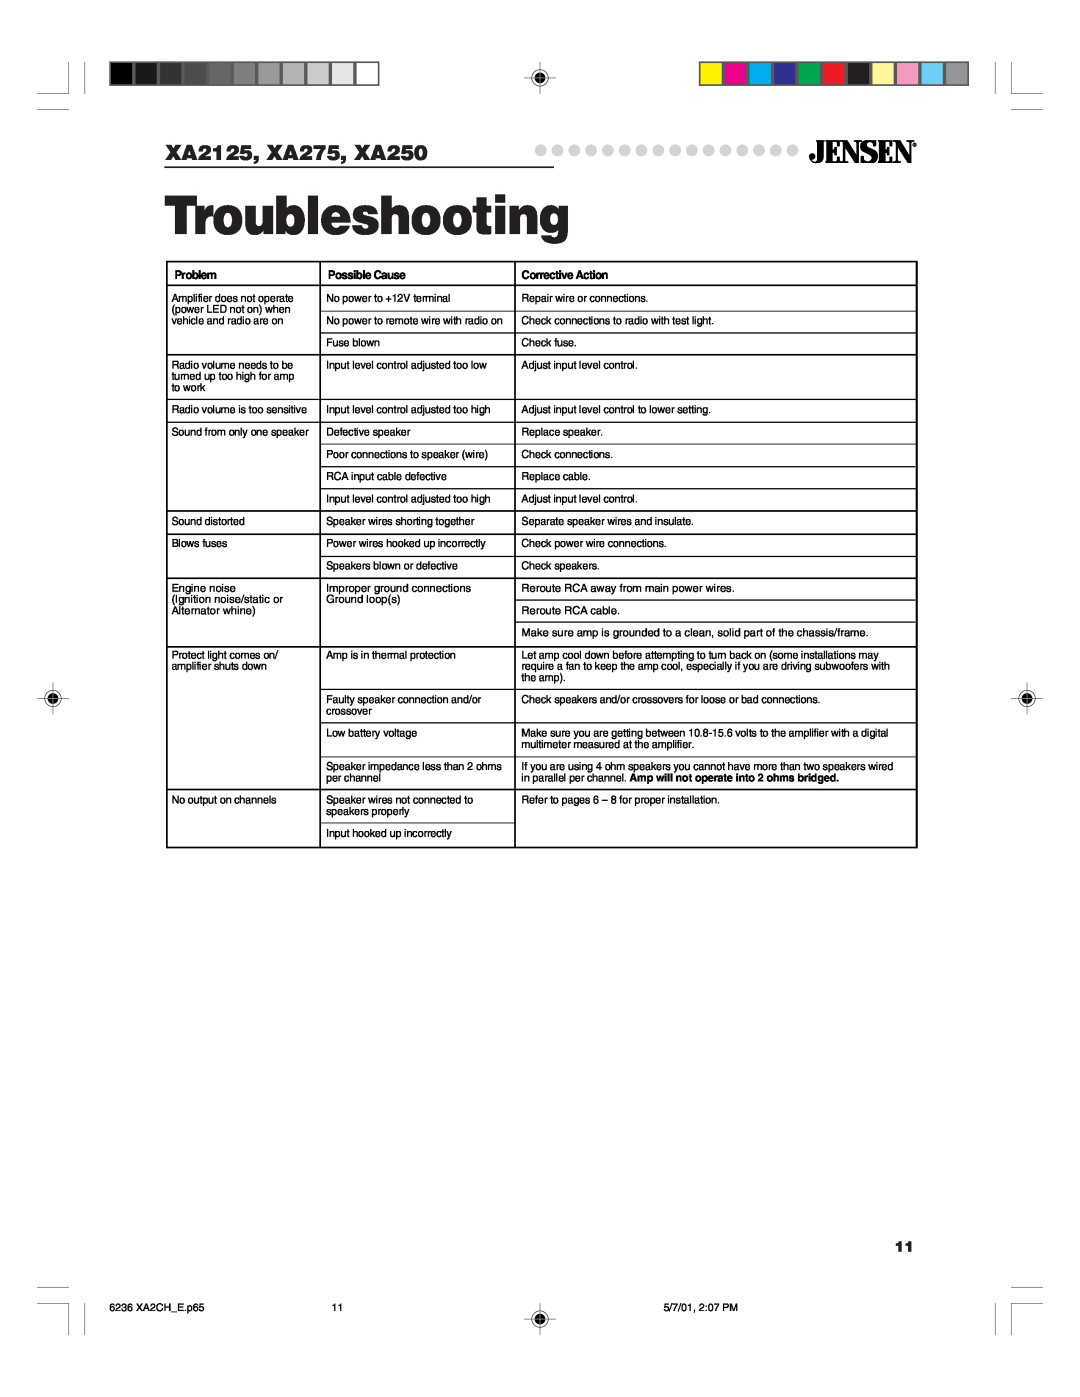 Jensen Tools warranty Troubleshooting, XA2125, XA275, XA250, Problem, Possible Cause, Corrective Action 